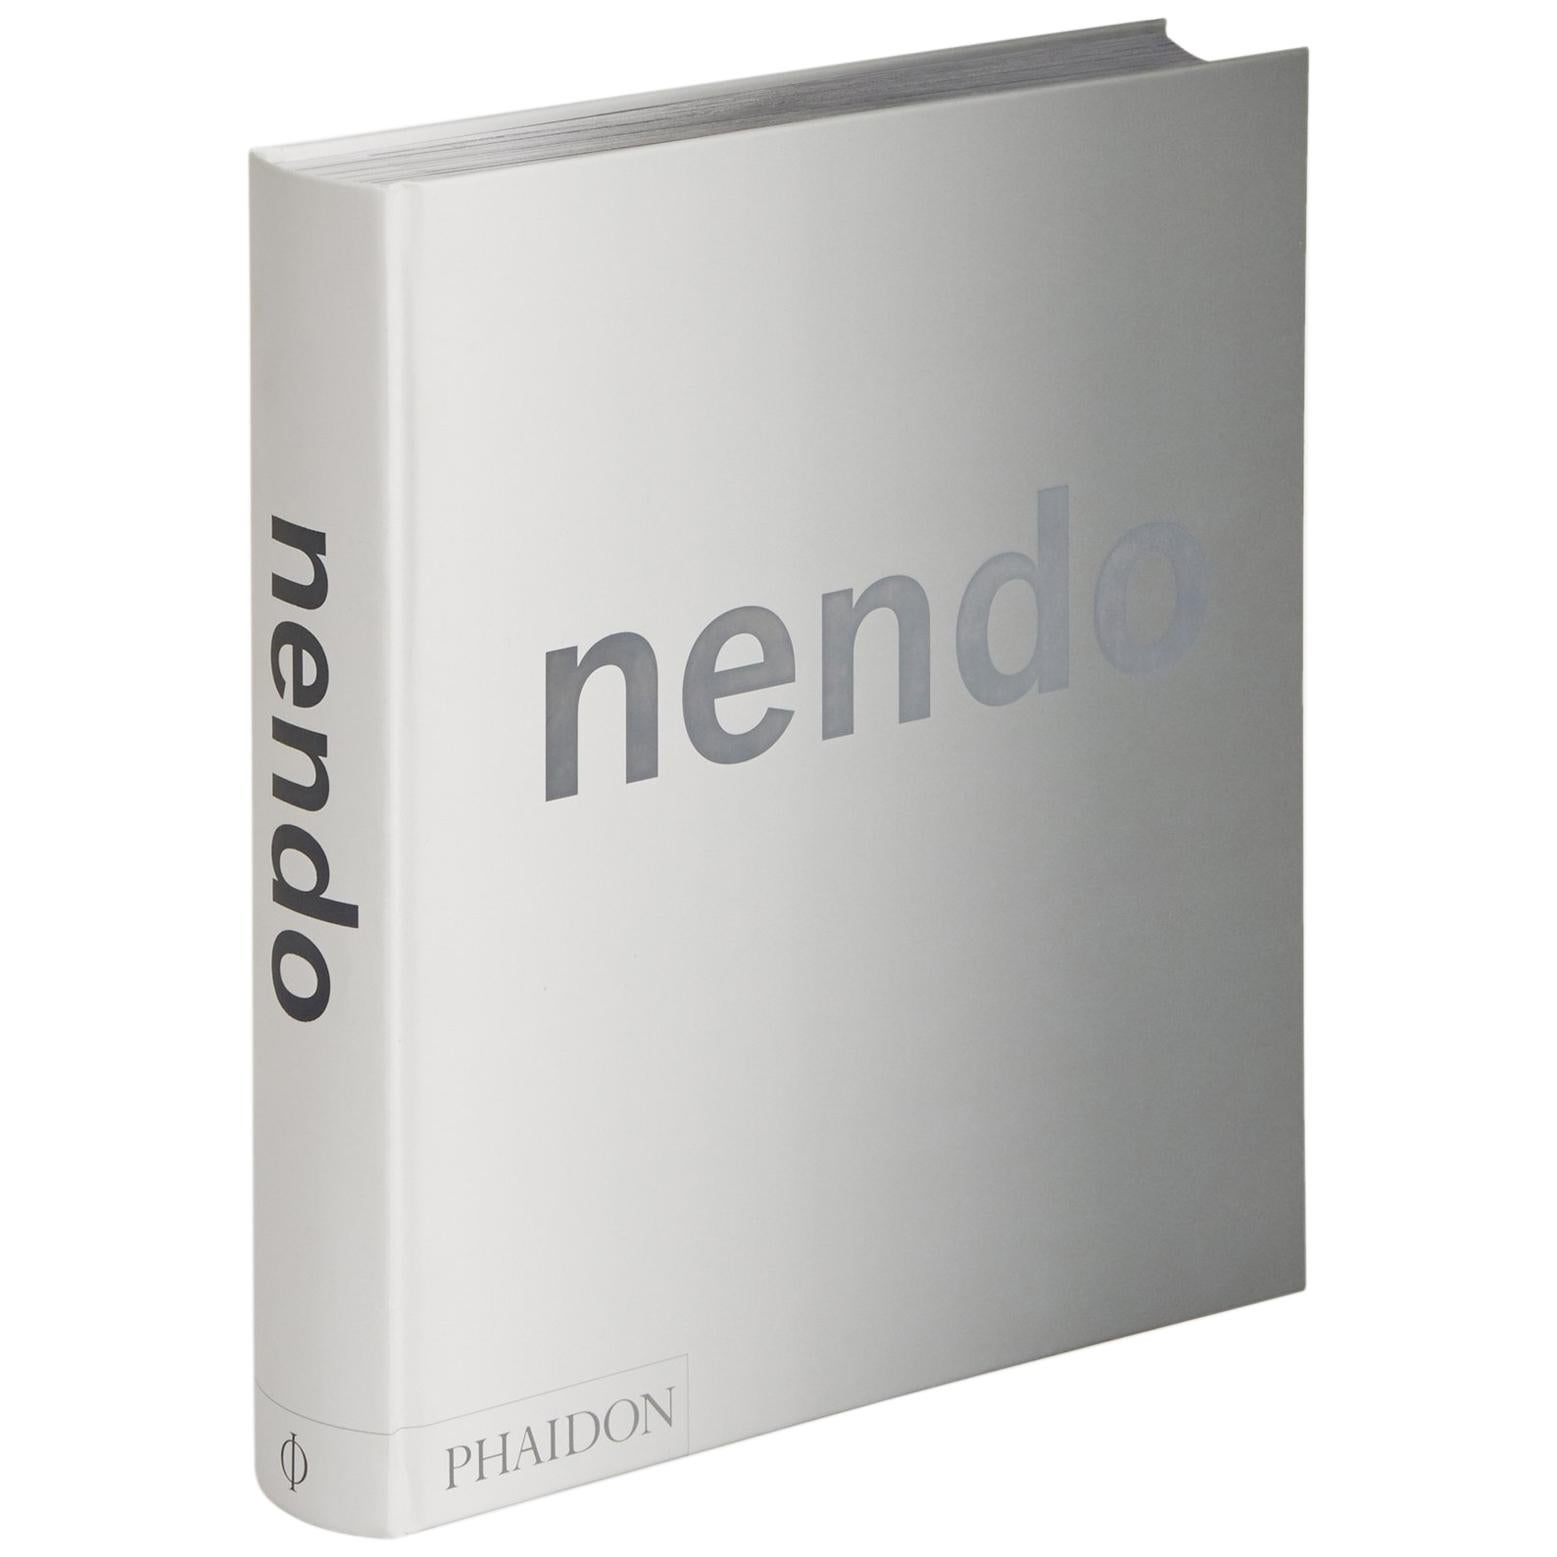 nendo - The ultimate monograph on the legendary multidisciplinary design studio For Sale